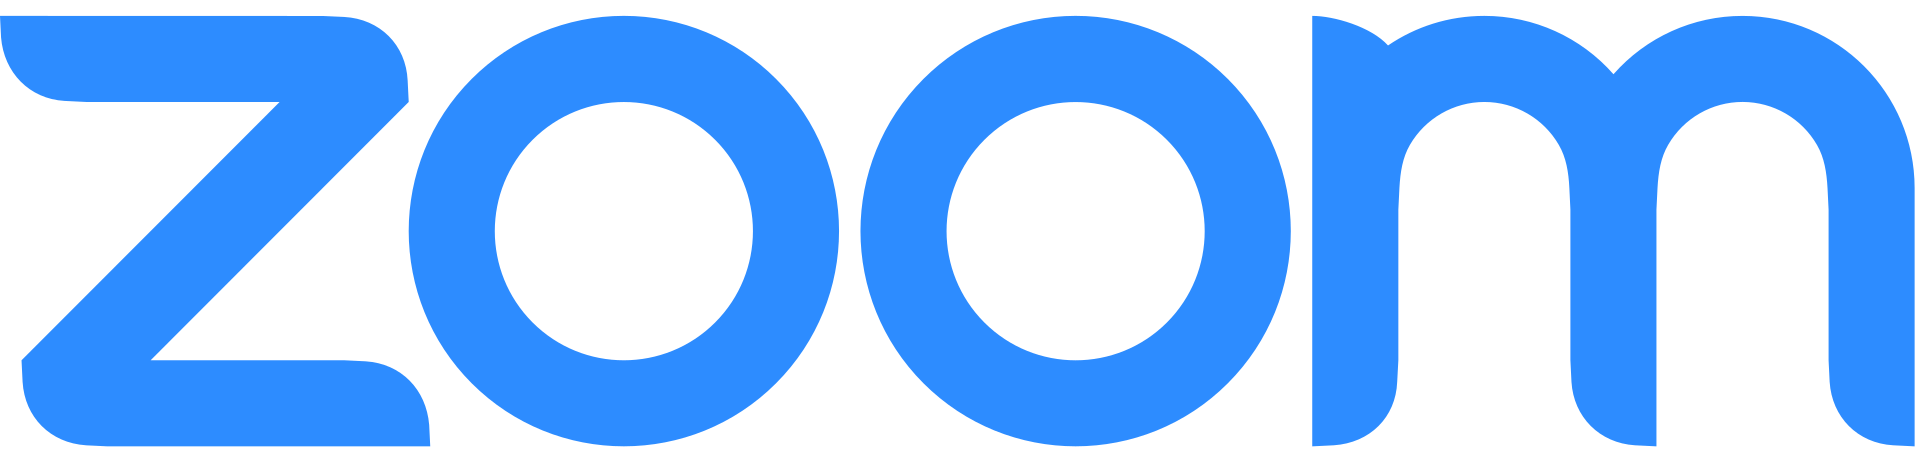 Zoomロゴ